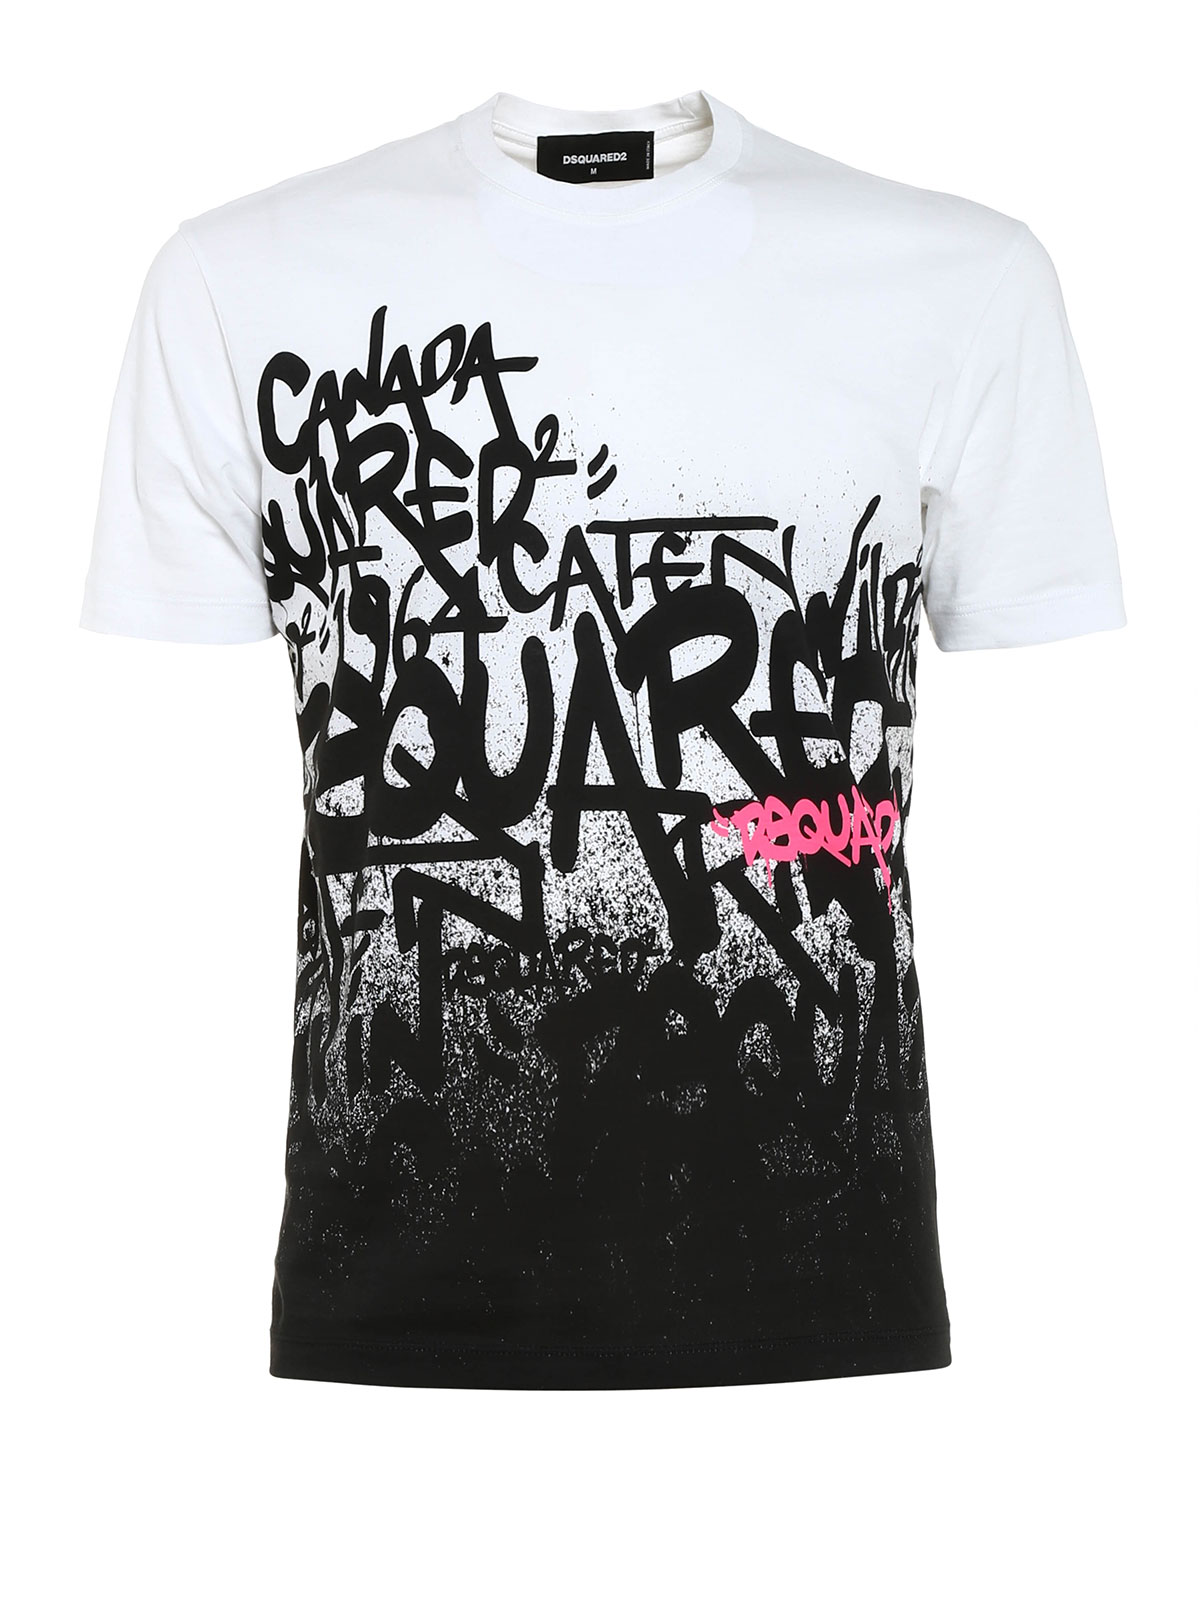 dsquared graffiti shirt